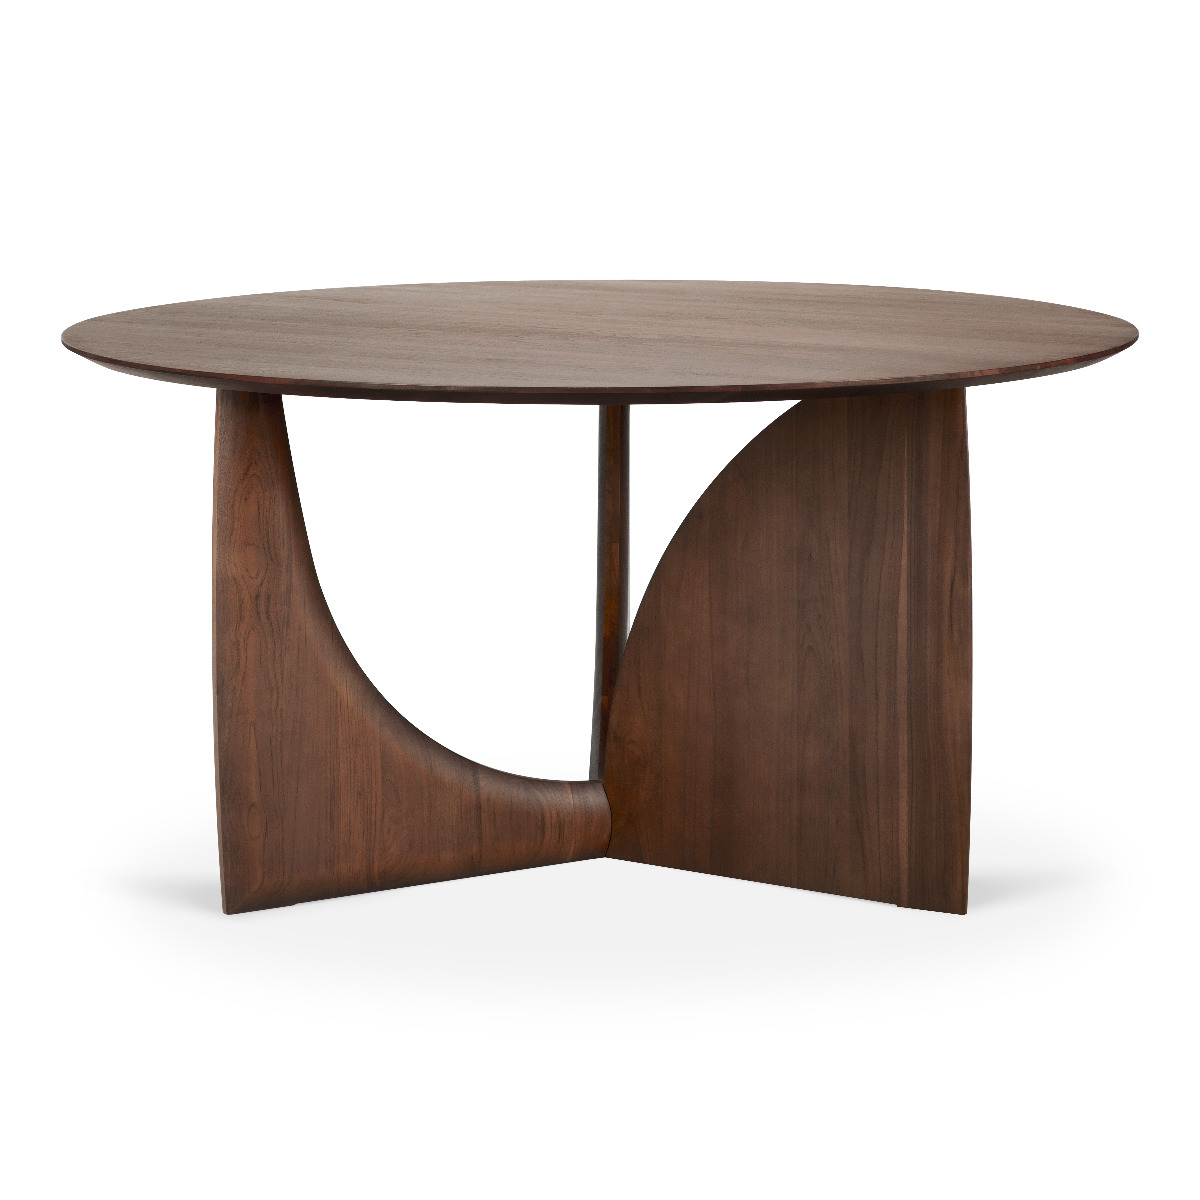 Geometric Round Dining Table 150cm